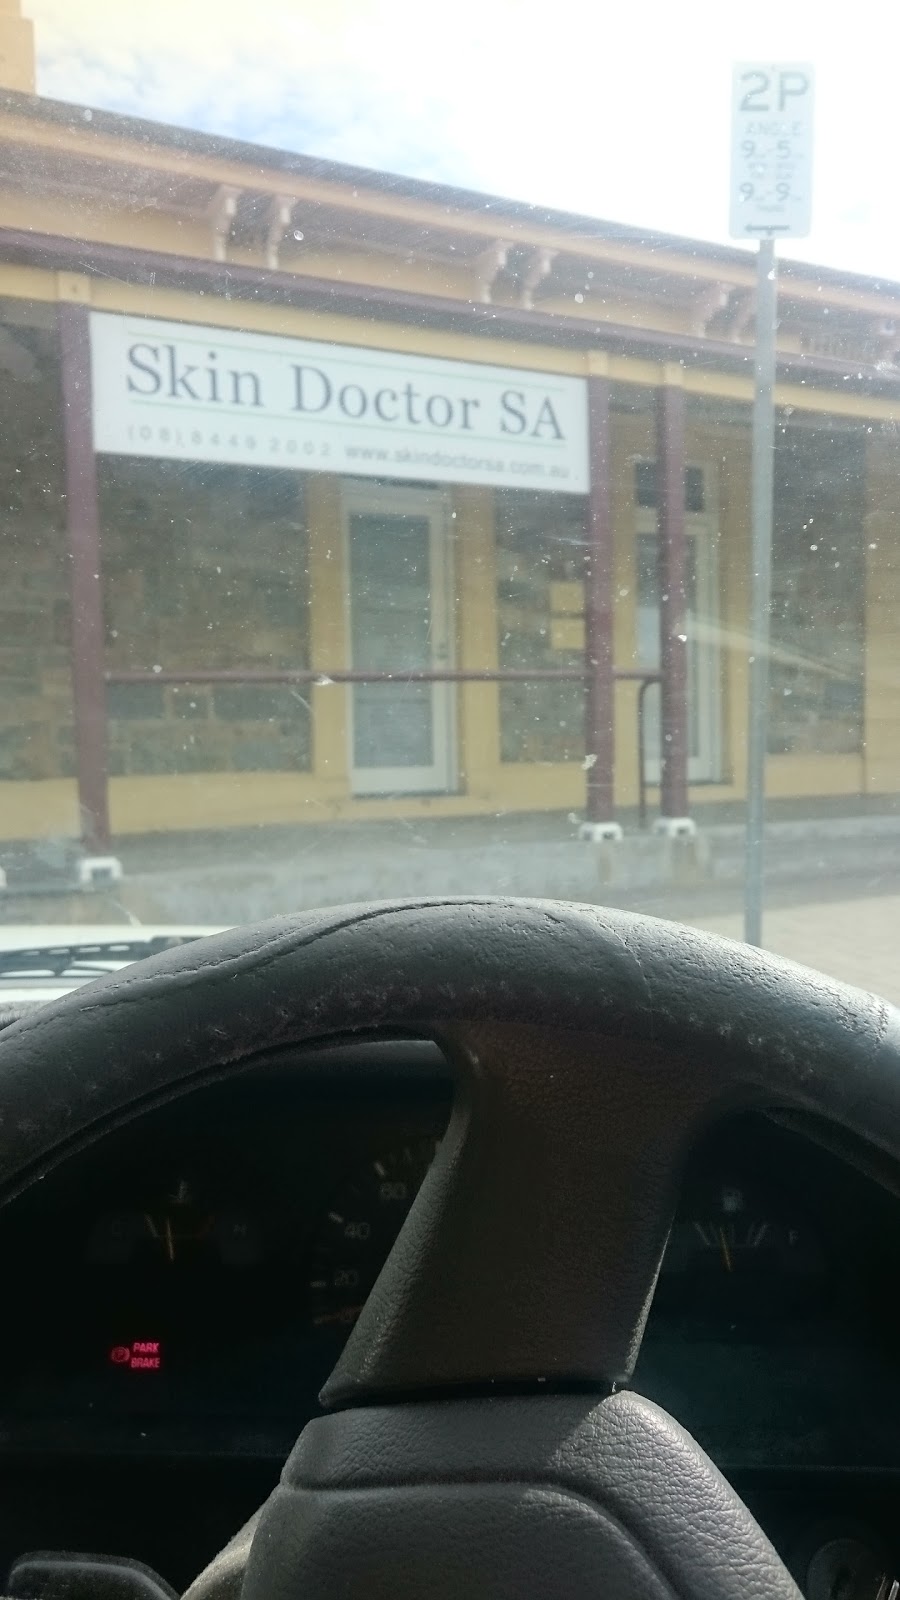 Skin Doctor SA | health | 15 Semaphore Rd, Semaphore SA 5019, Australia | 0884492002 OR +61 8 8449 2002